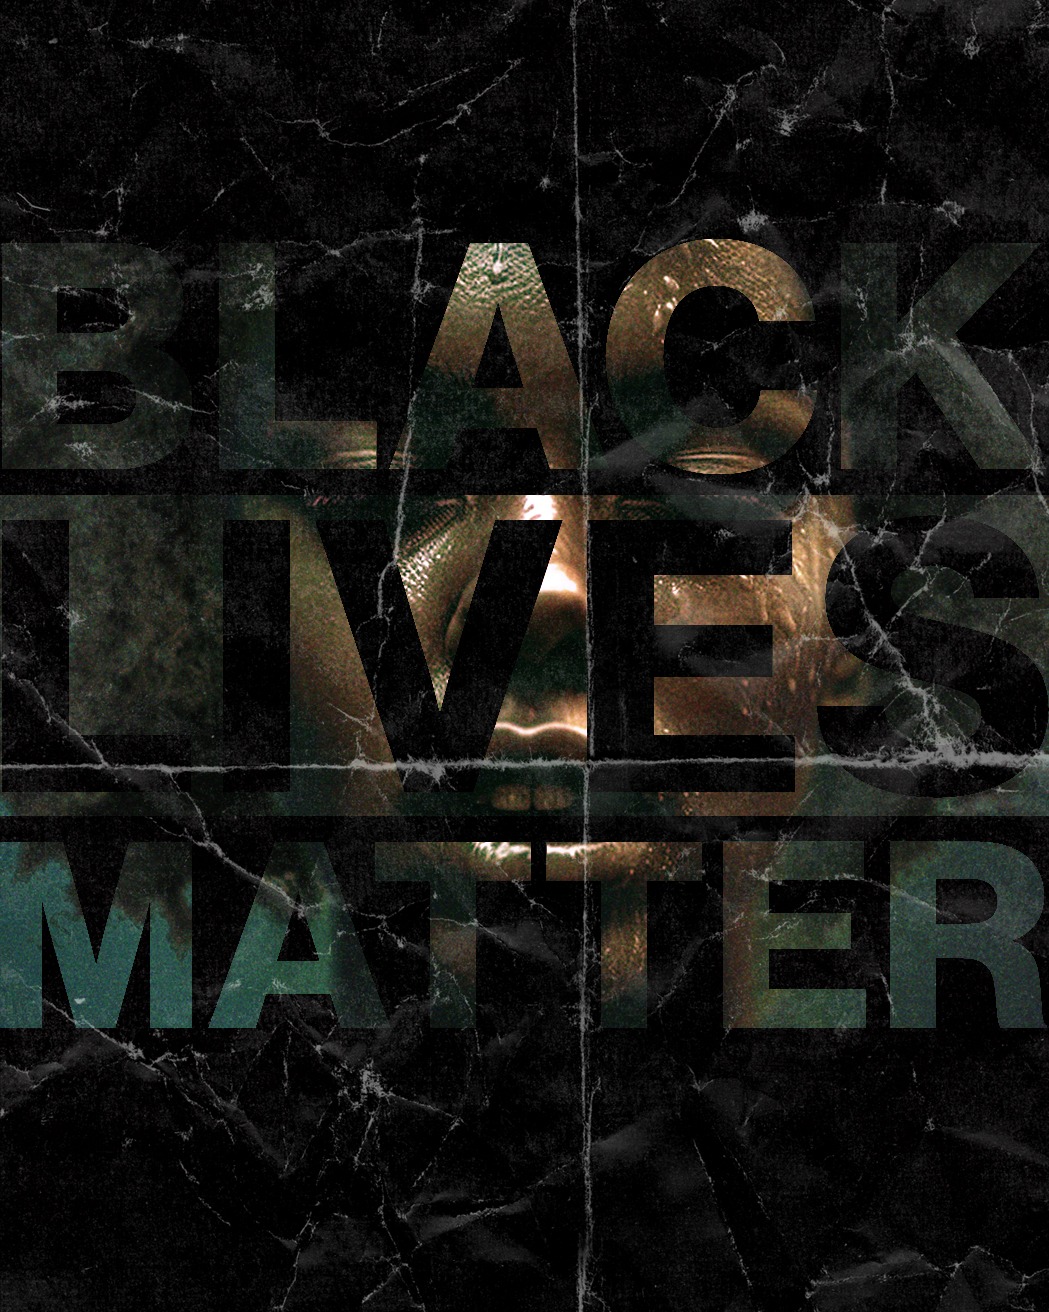 VISUAL DIARY1 - BLACK LIVES MATTER